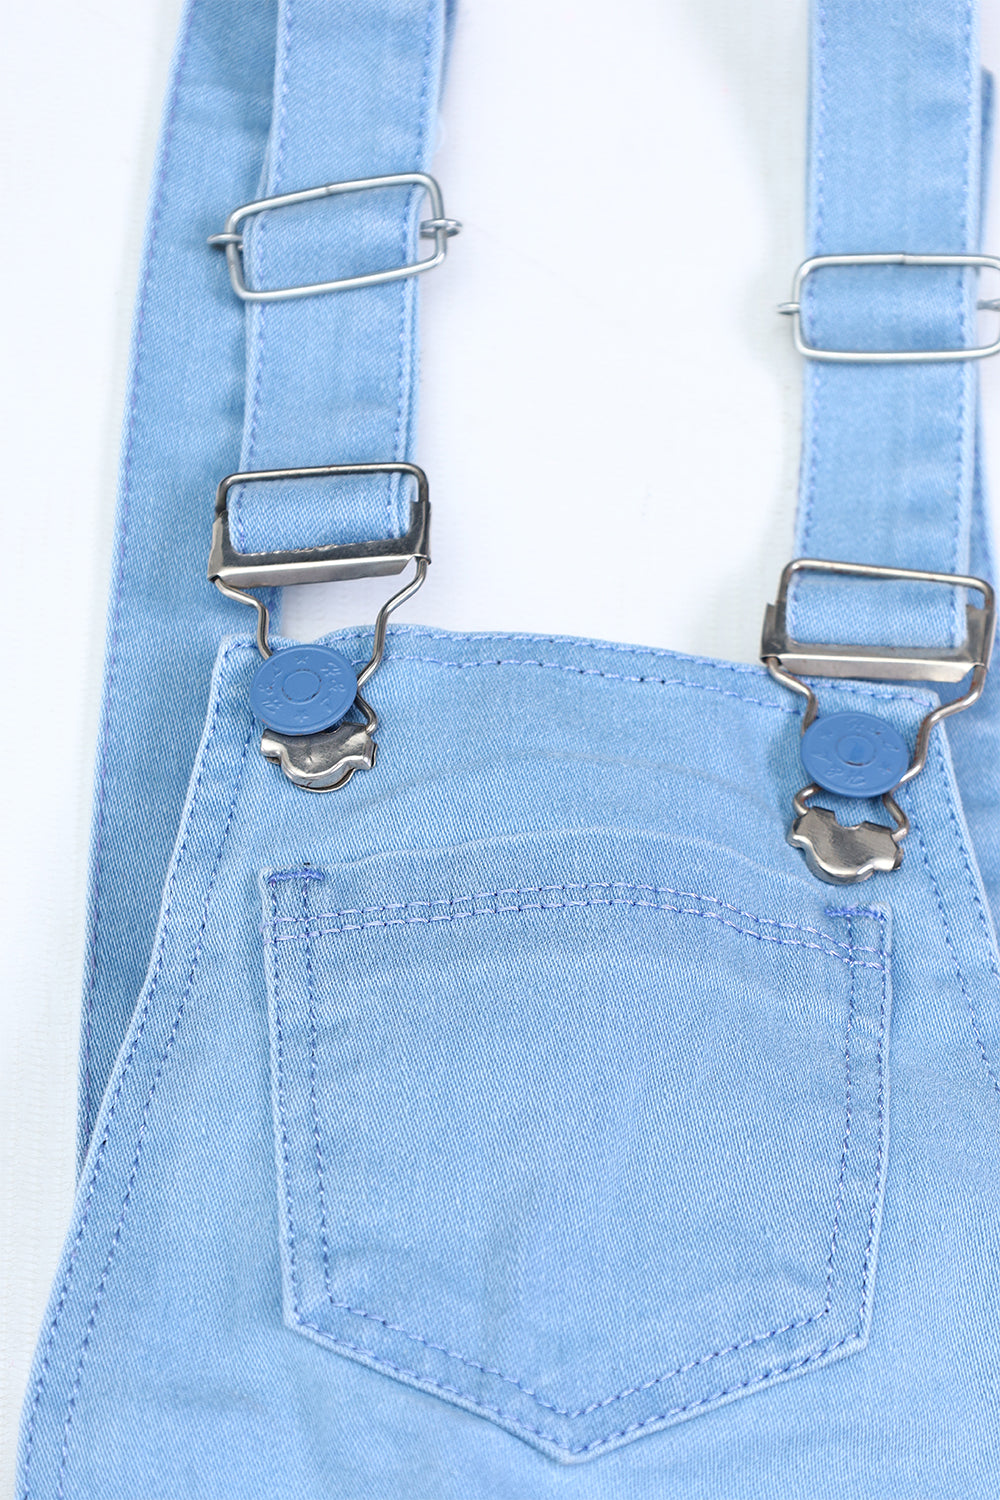 Denim Dungaree with adjustable hooks 100% cotton fabric